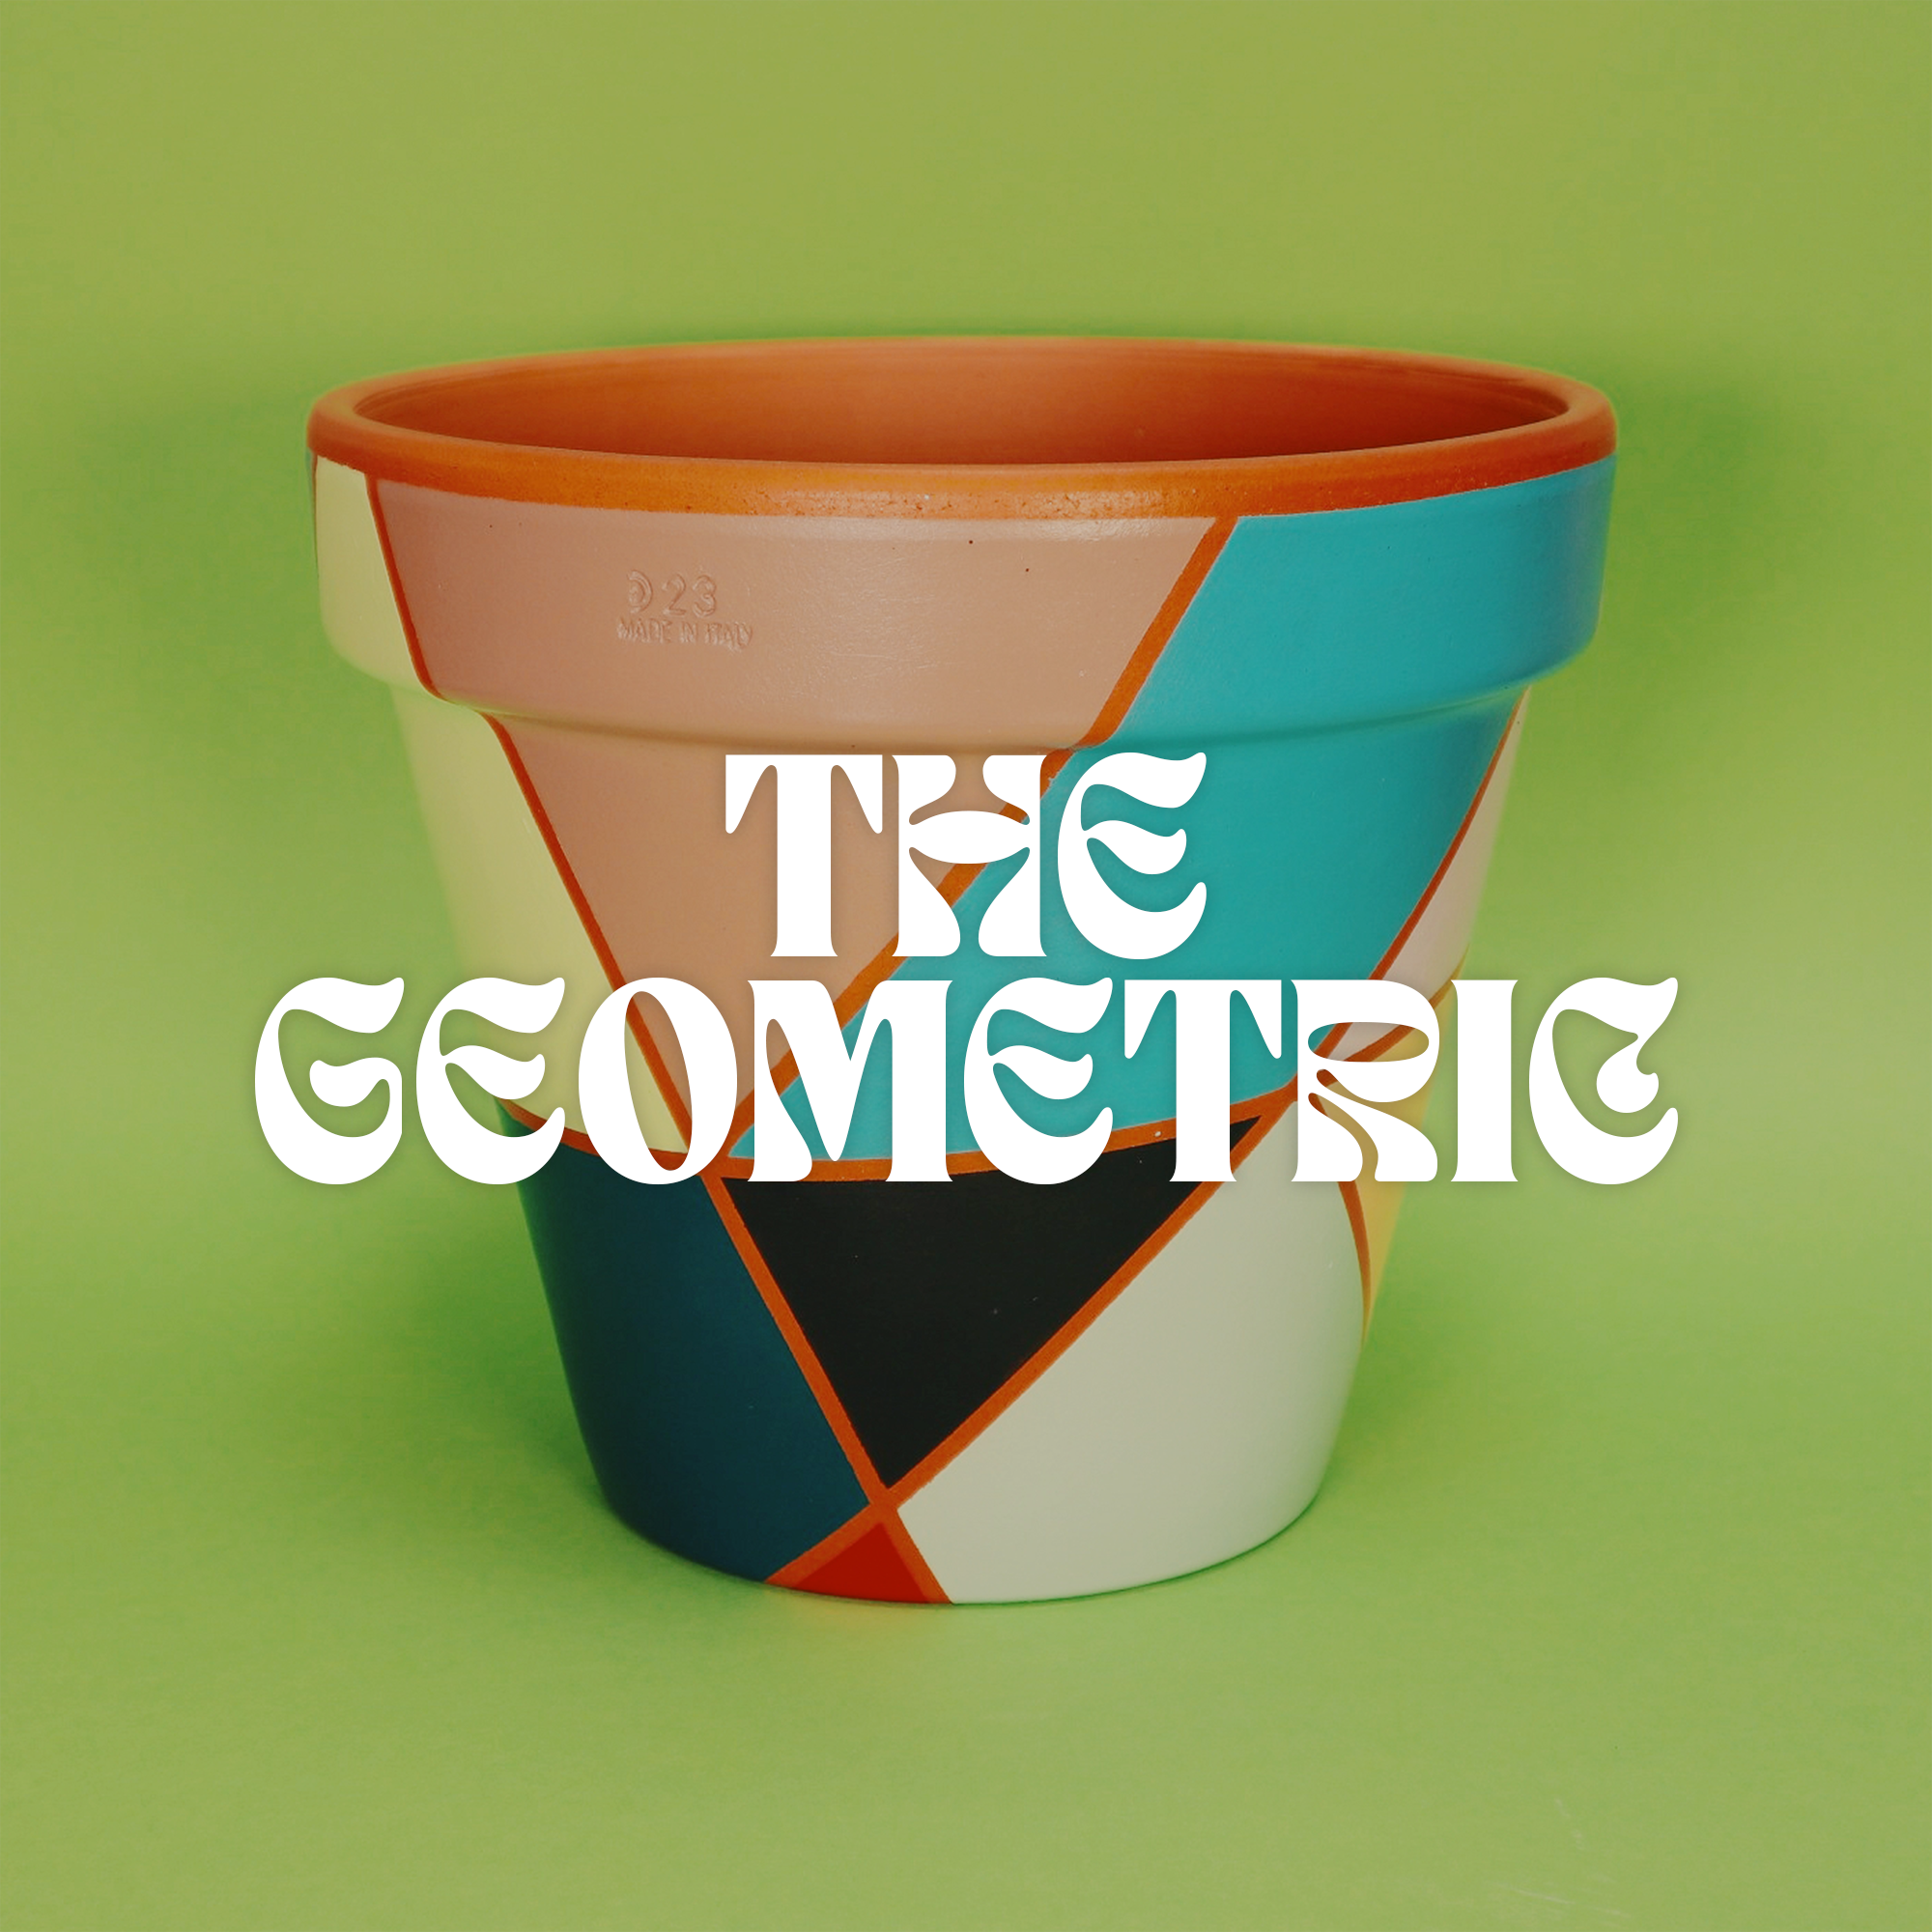 The Geometric